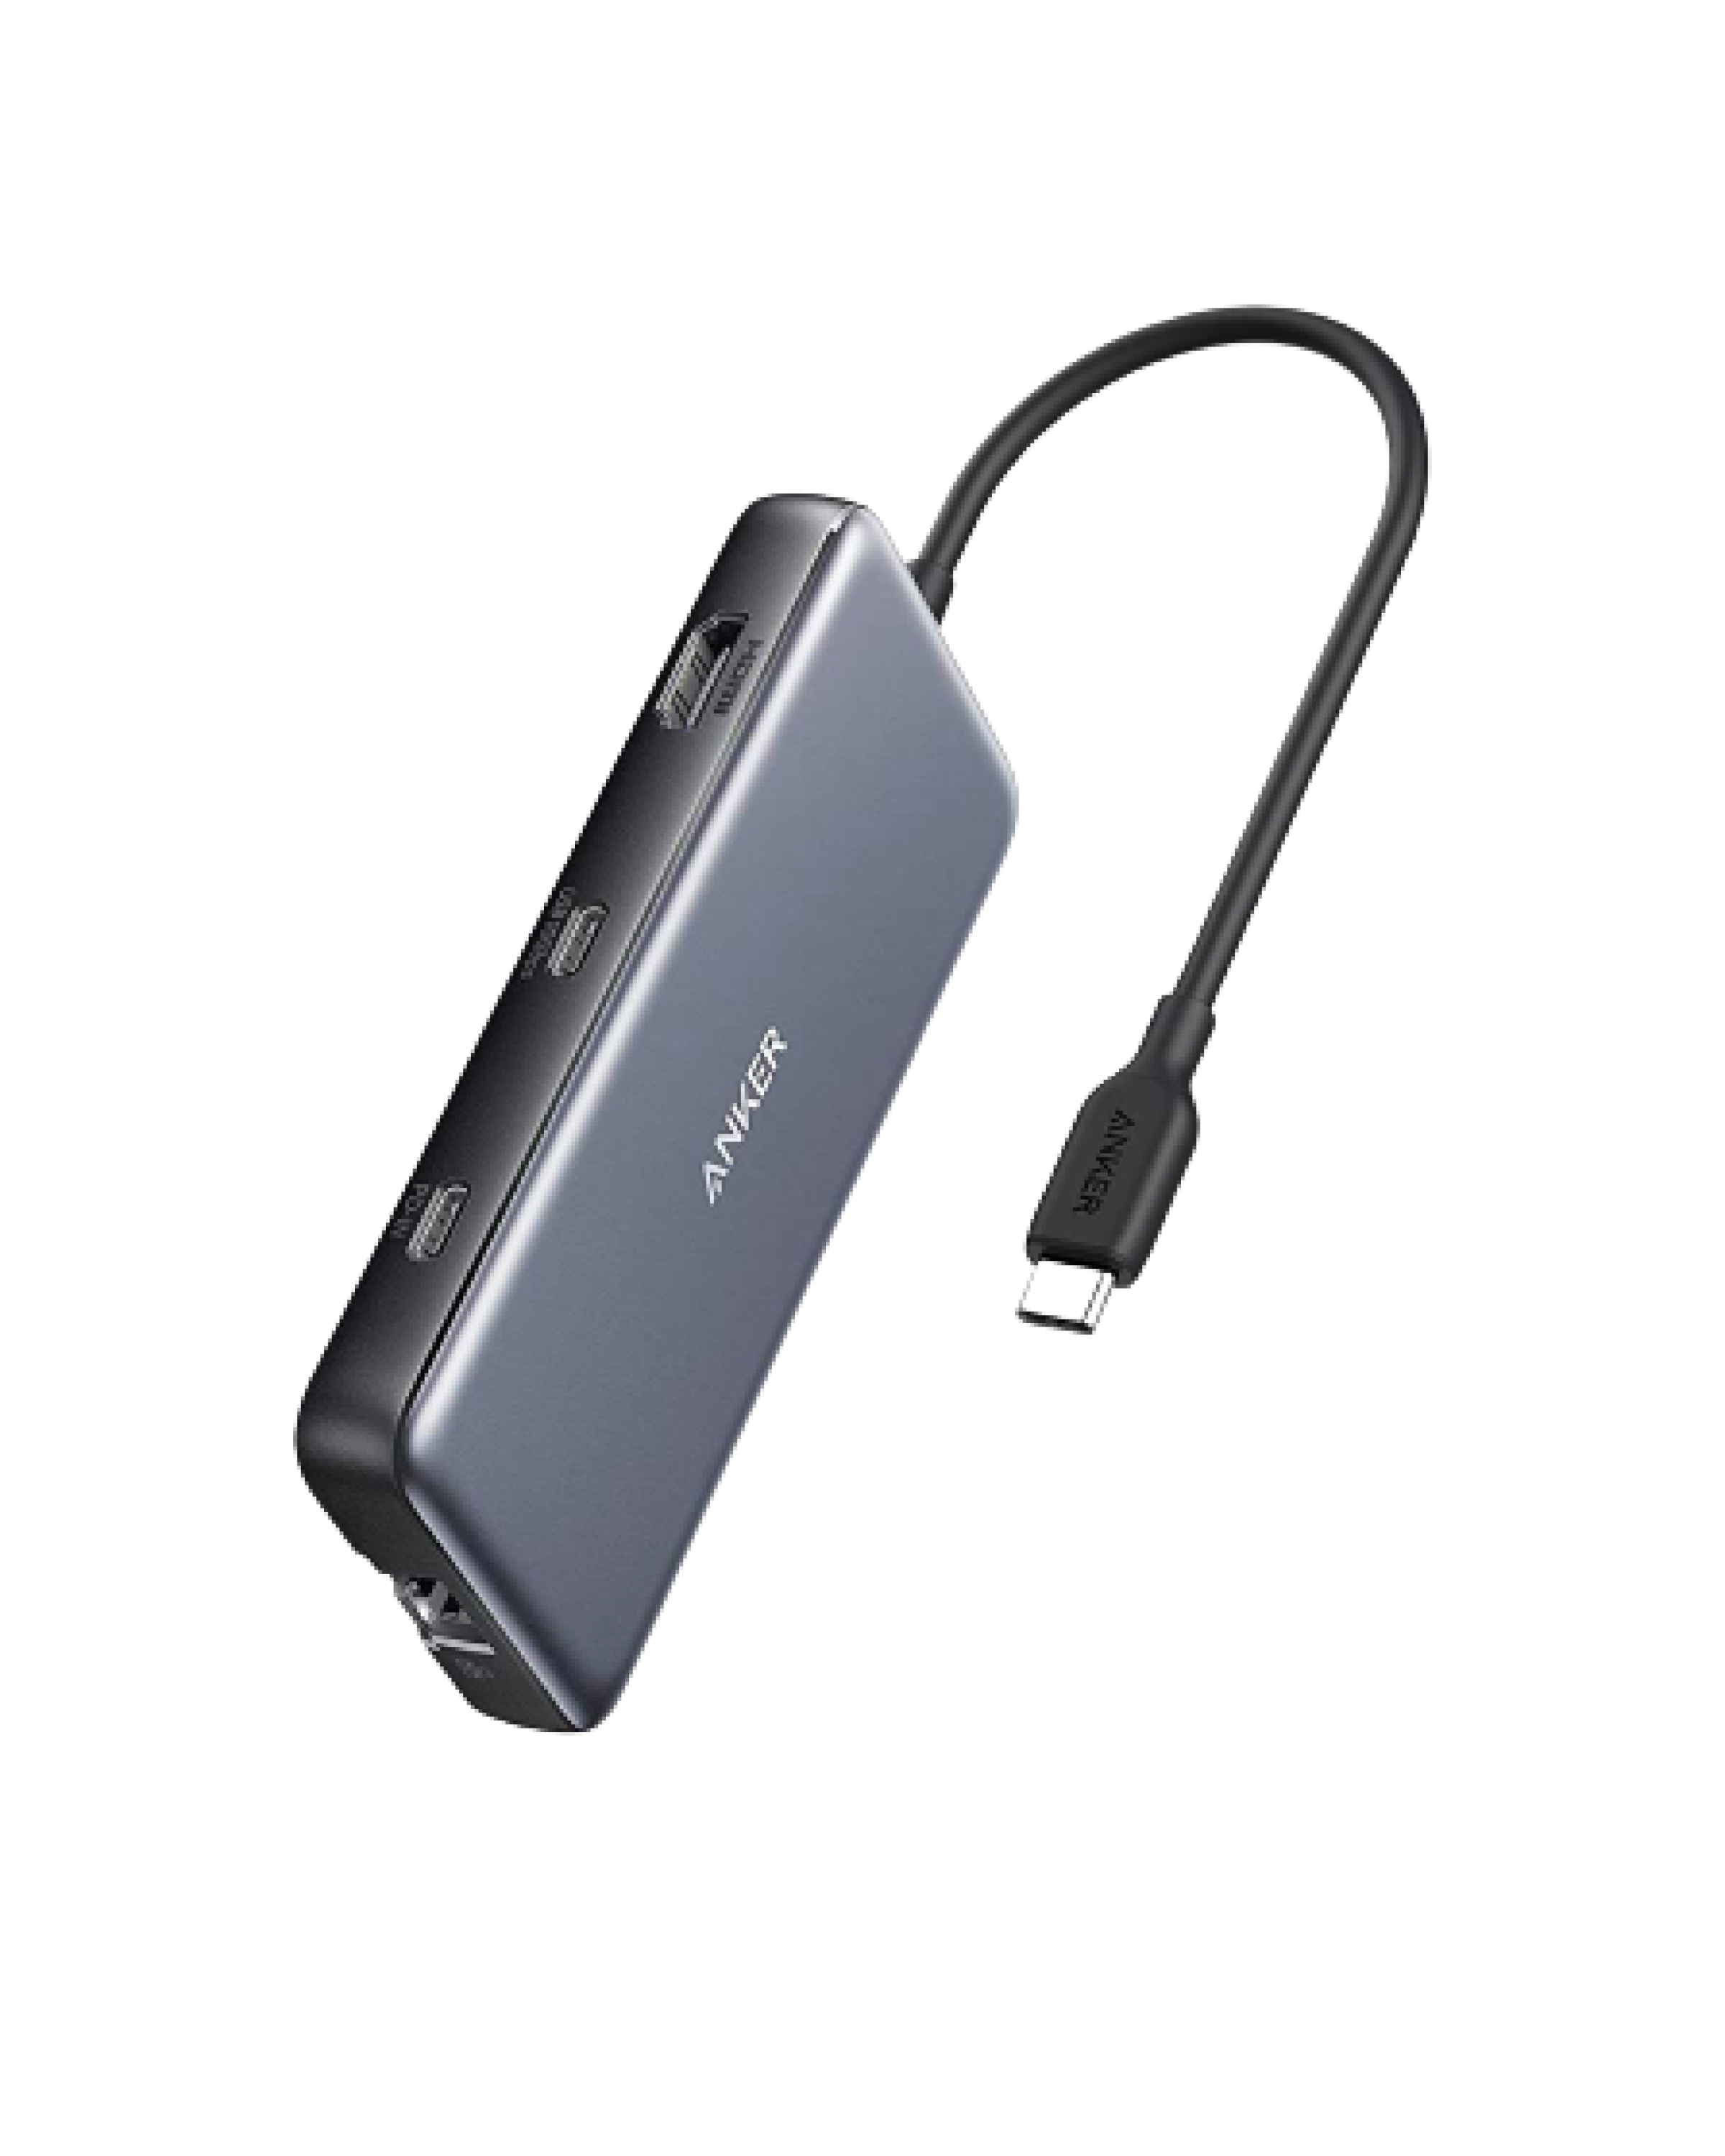 Câble pour chargeur Iphone ANKER Powerline+ II - 90cm A8452H41